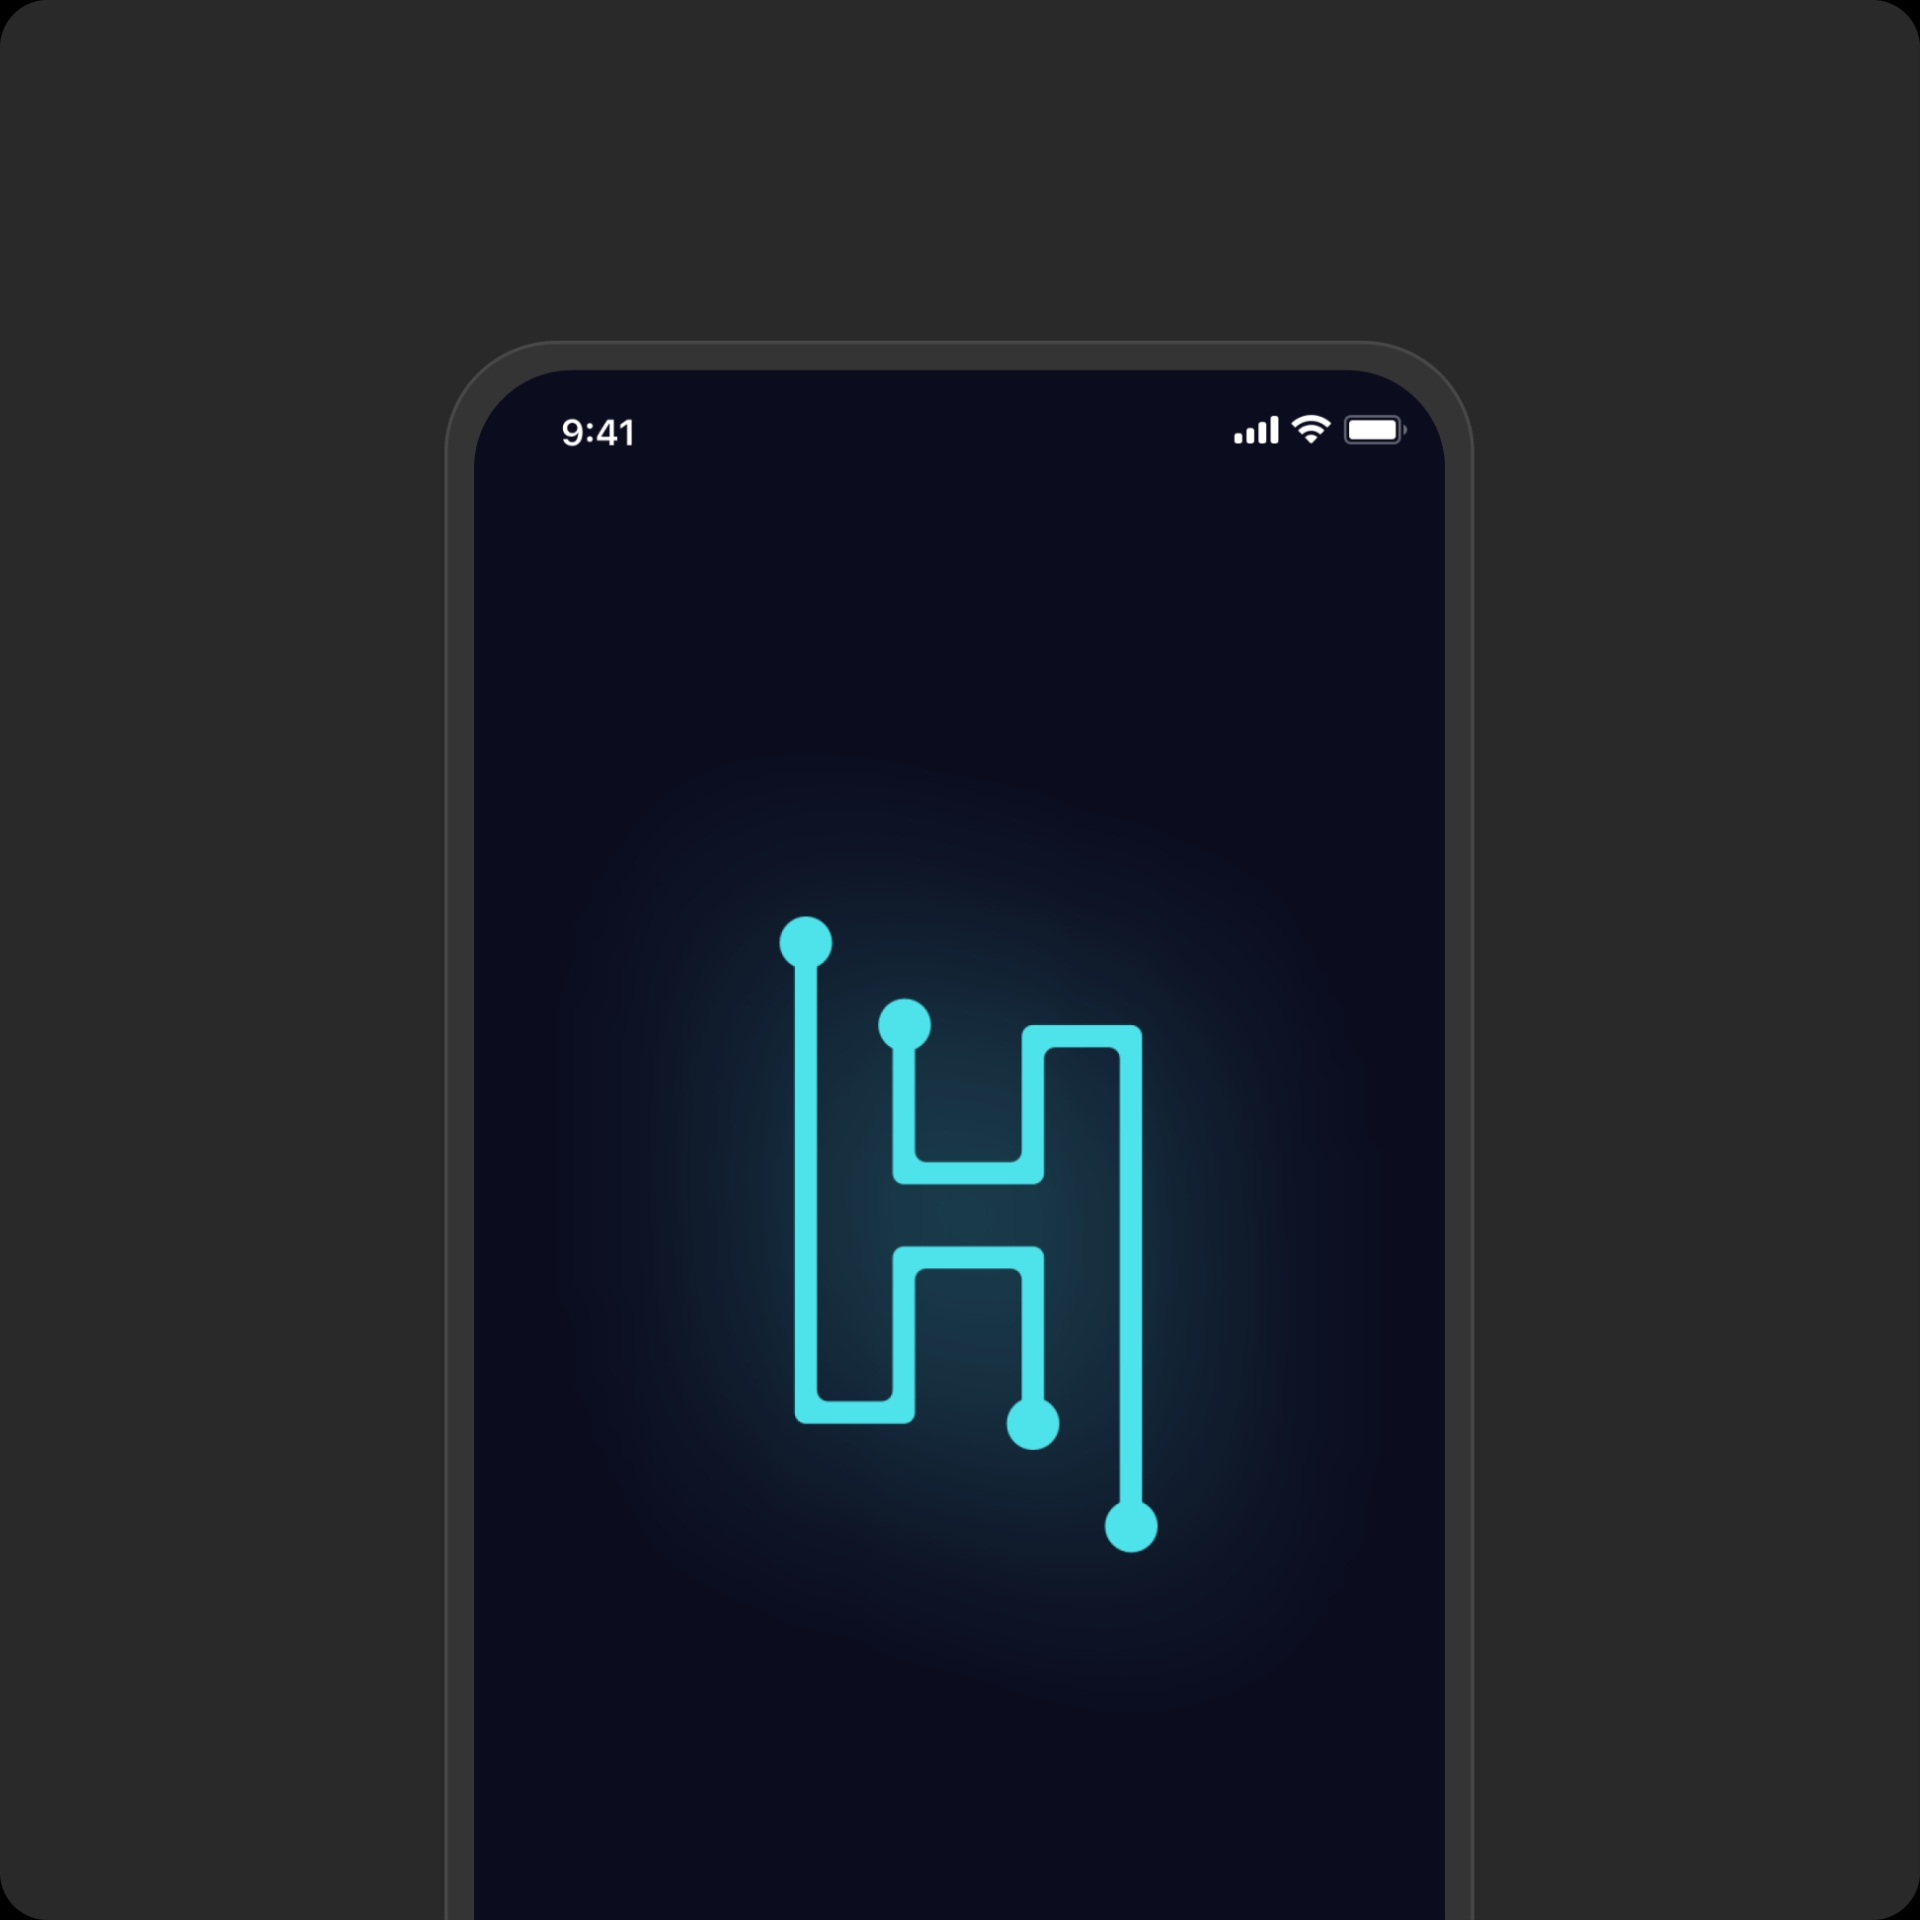 HUUB app mockup showing the logo